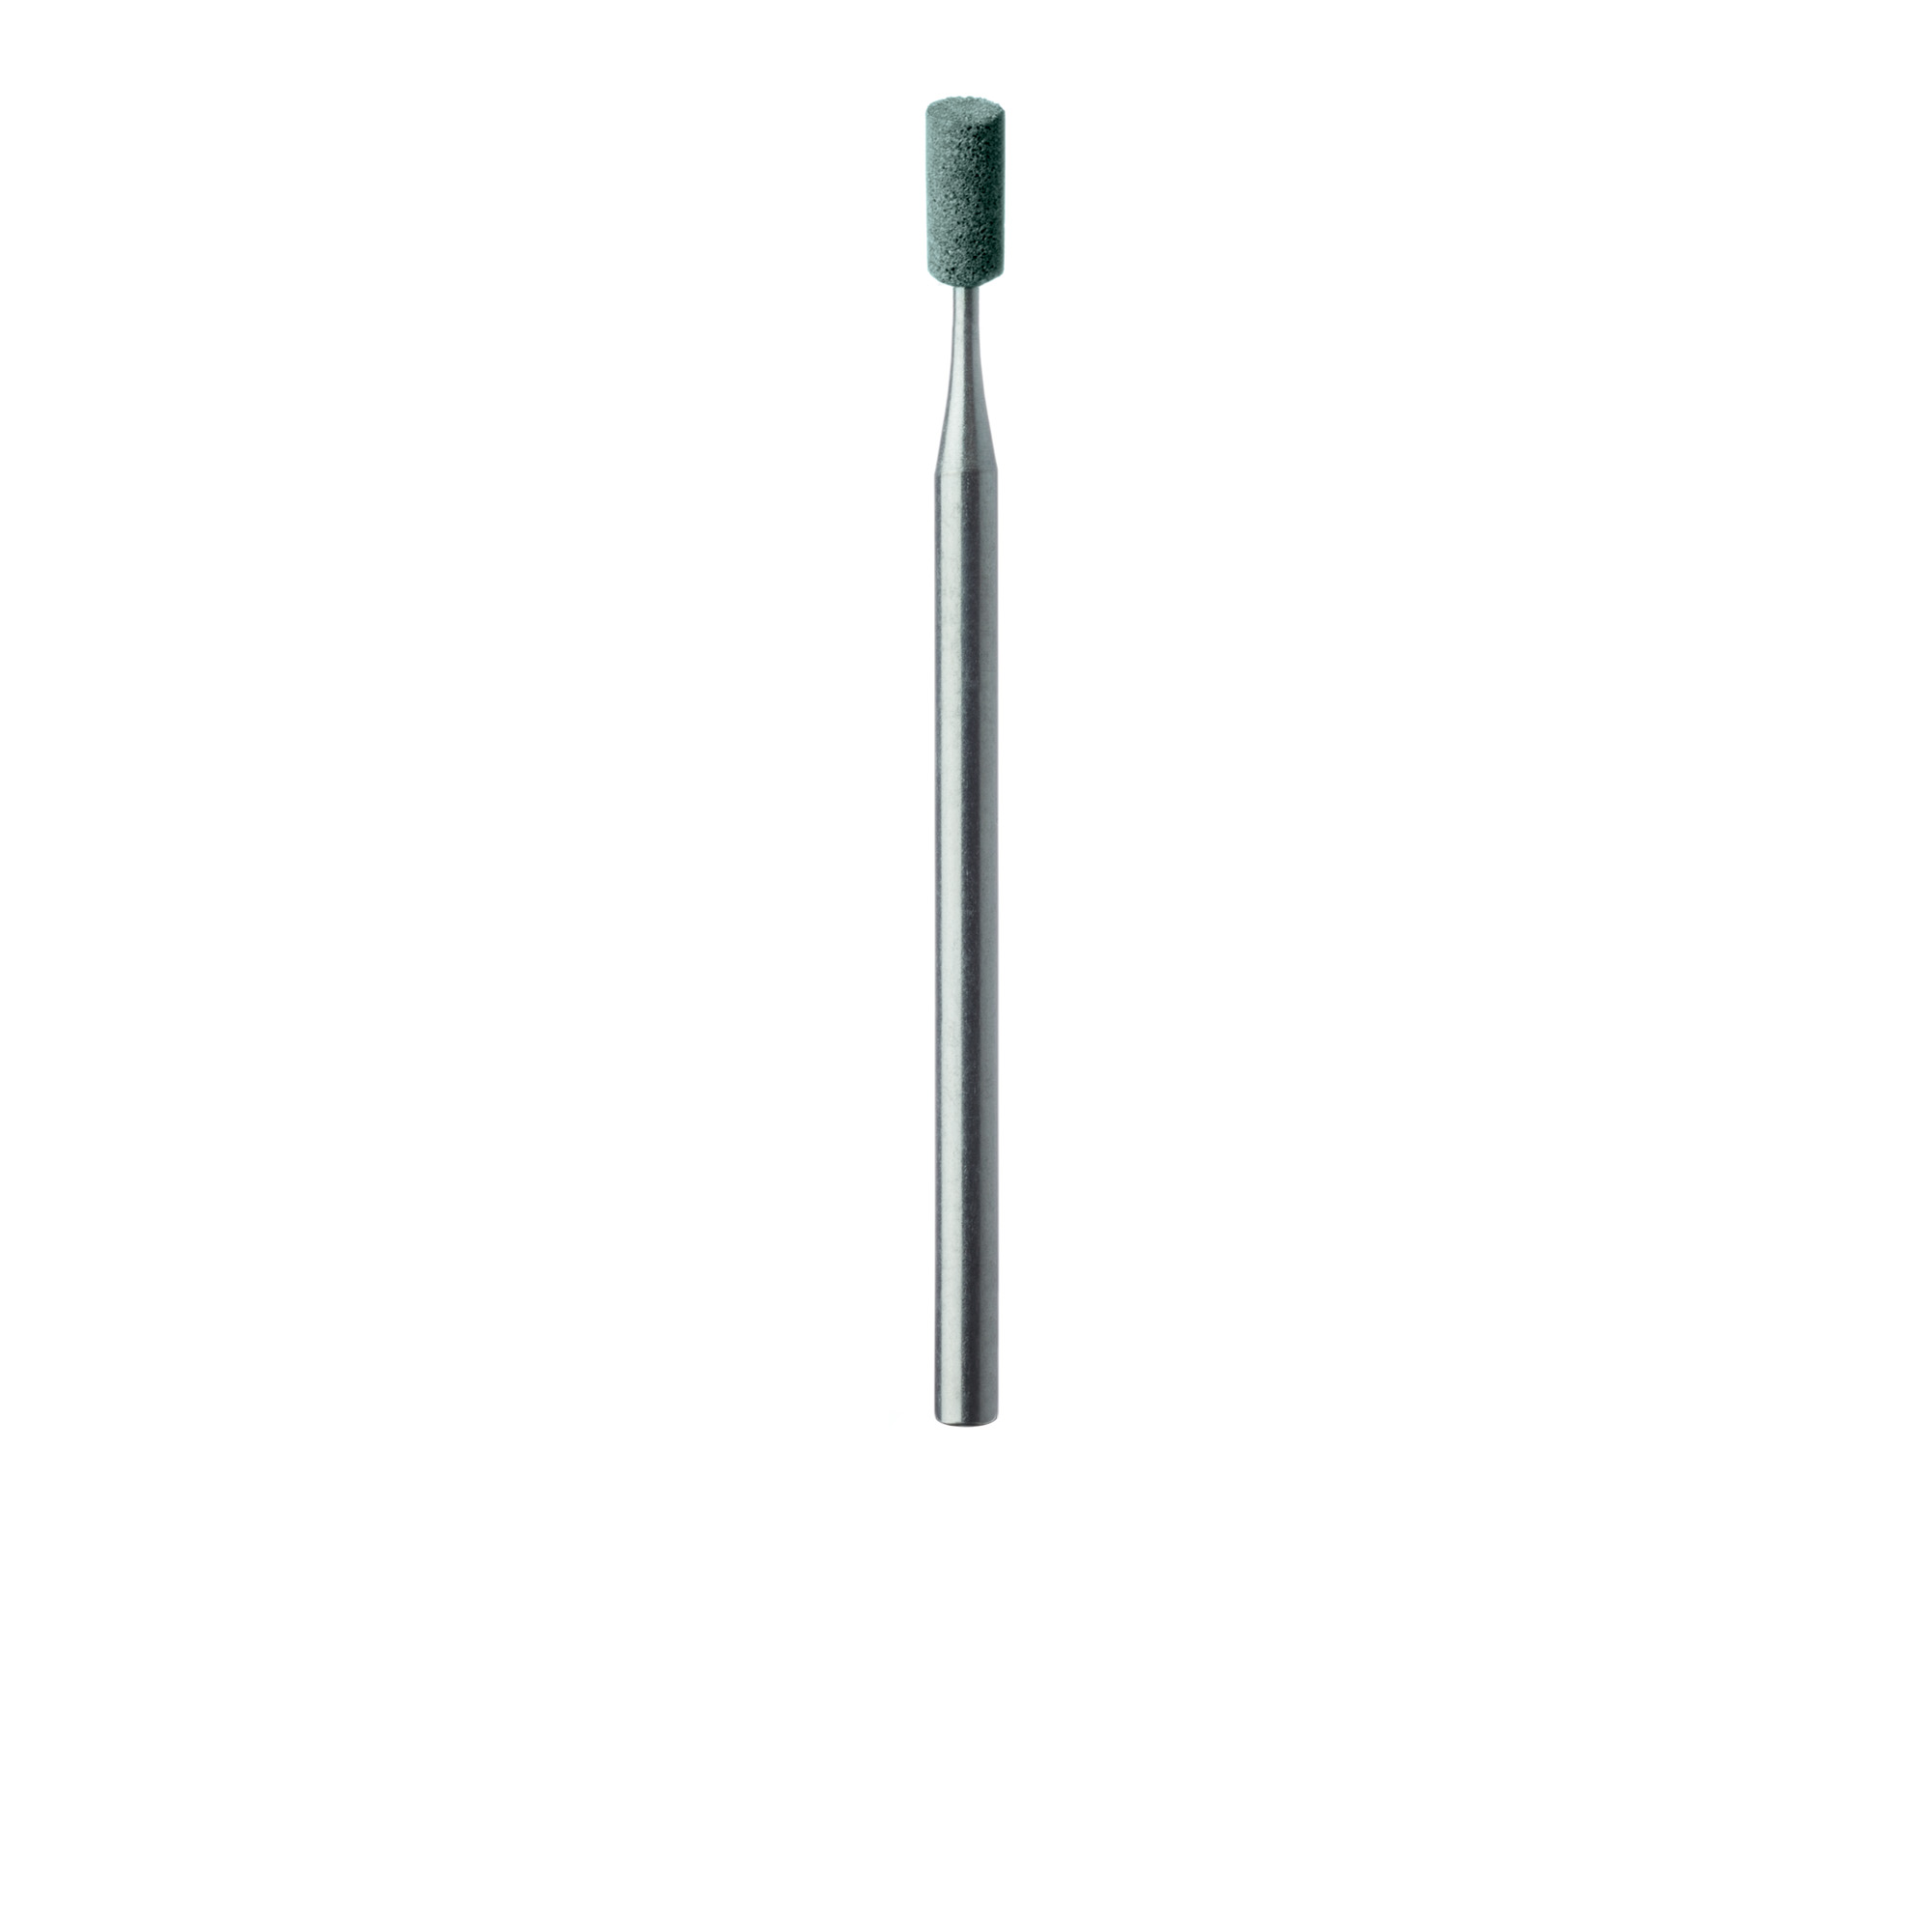 638-025-HP-GRN Abrasive, Green, Long Cylinder, 2.5mm Ø, Medium, HP